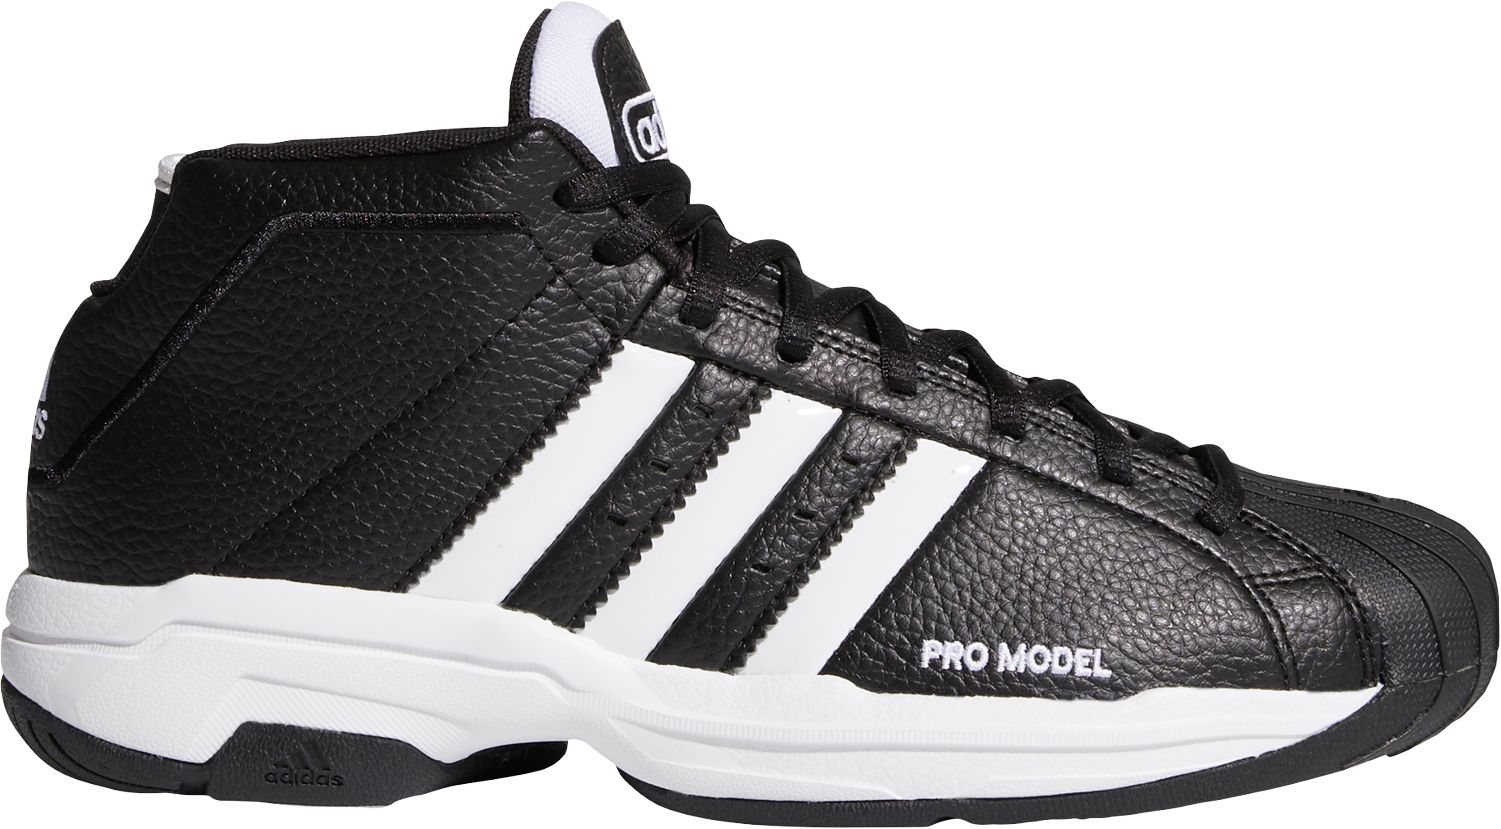 Adidas Pro Model 2G Basketball